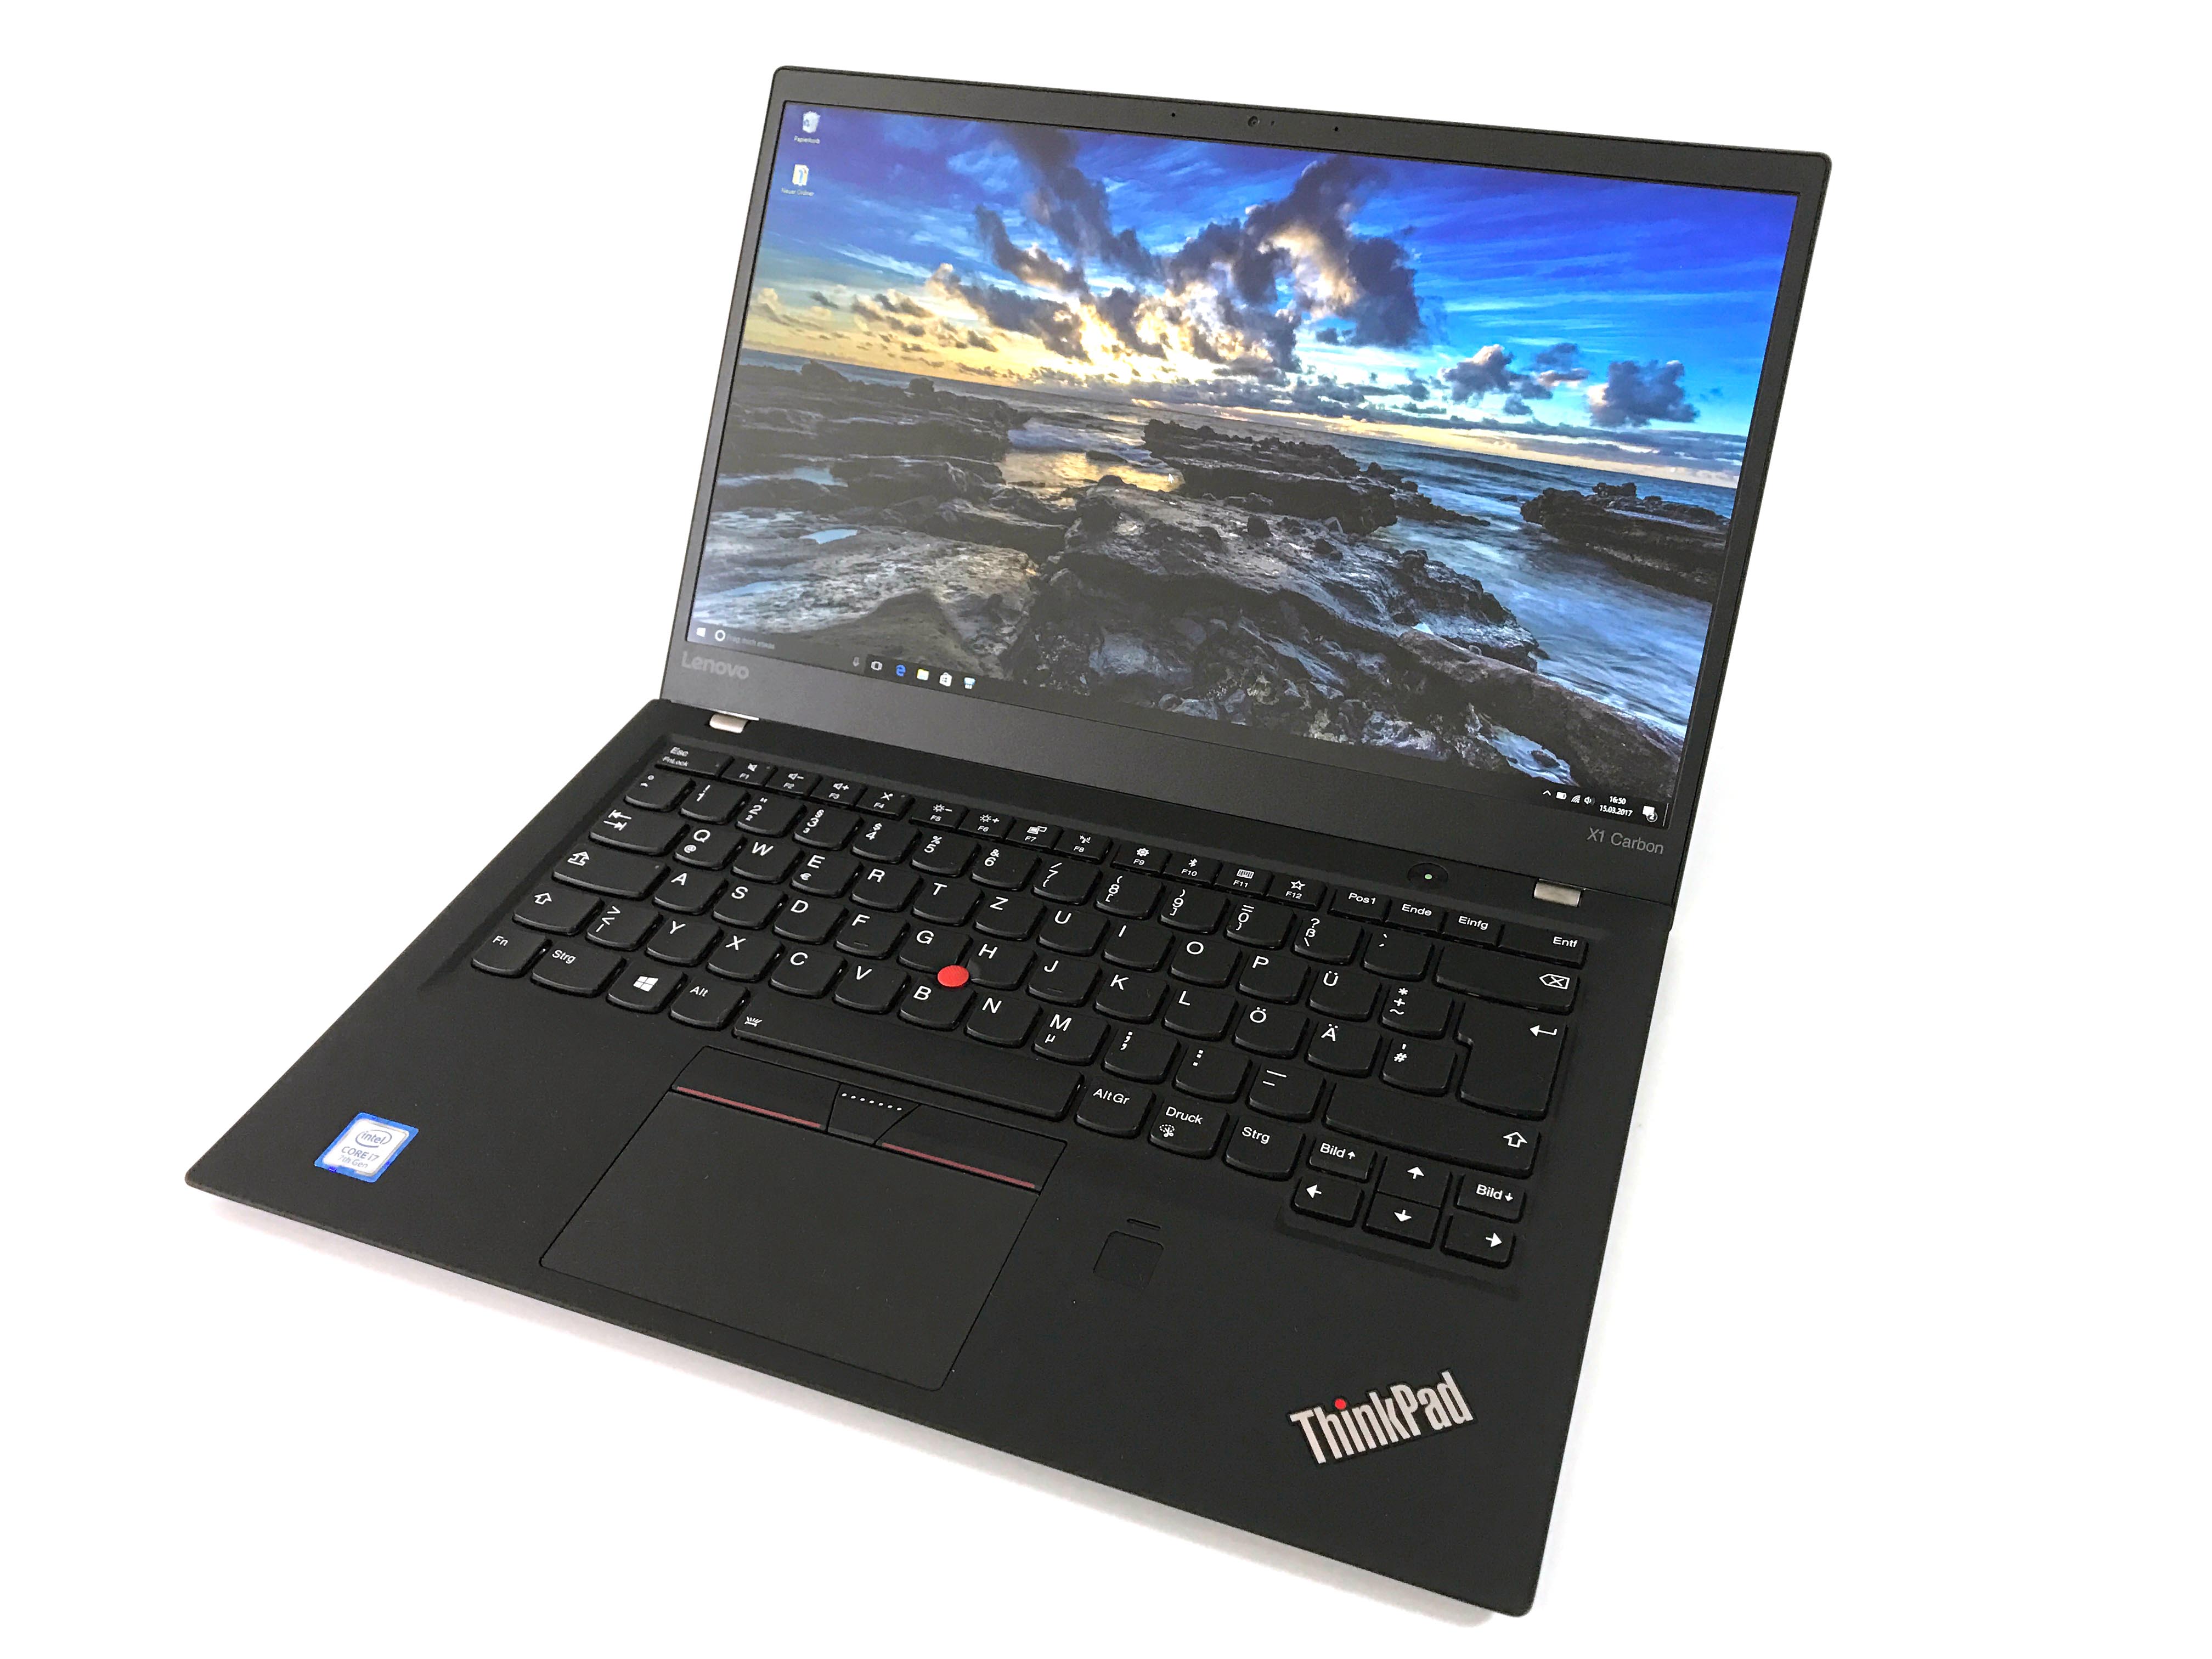 ThinkPad X1 Carbon 5th (2017年モデル)